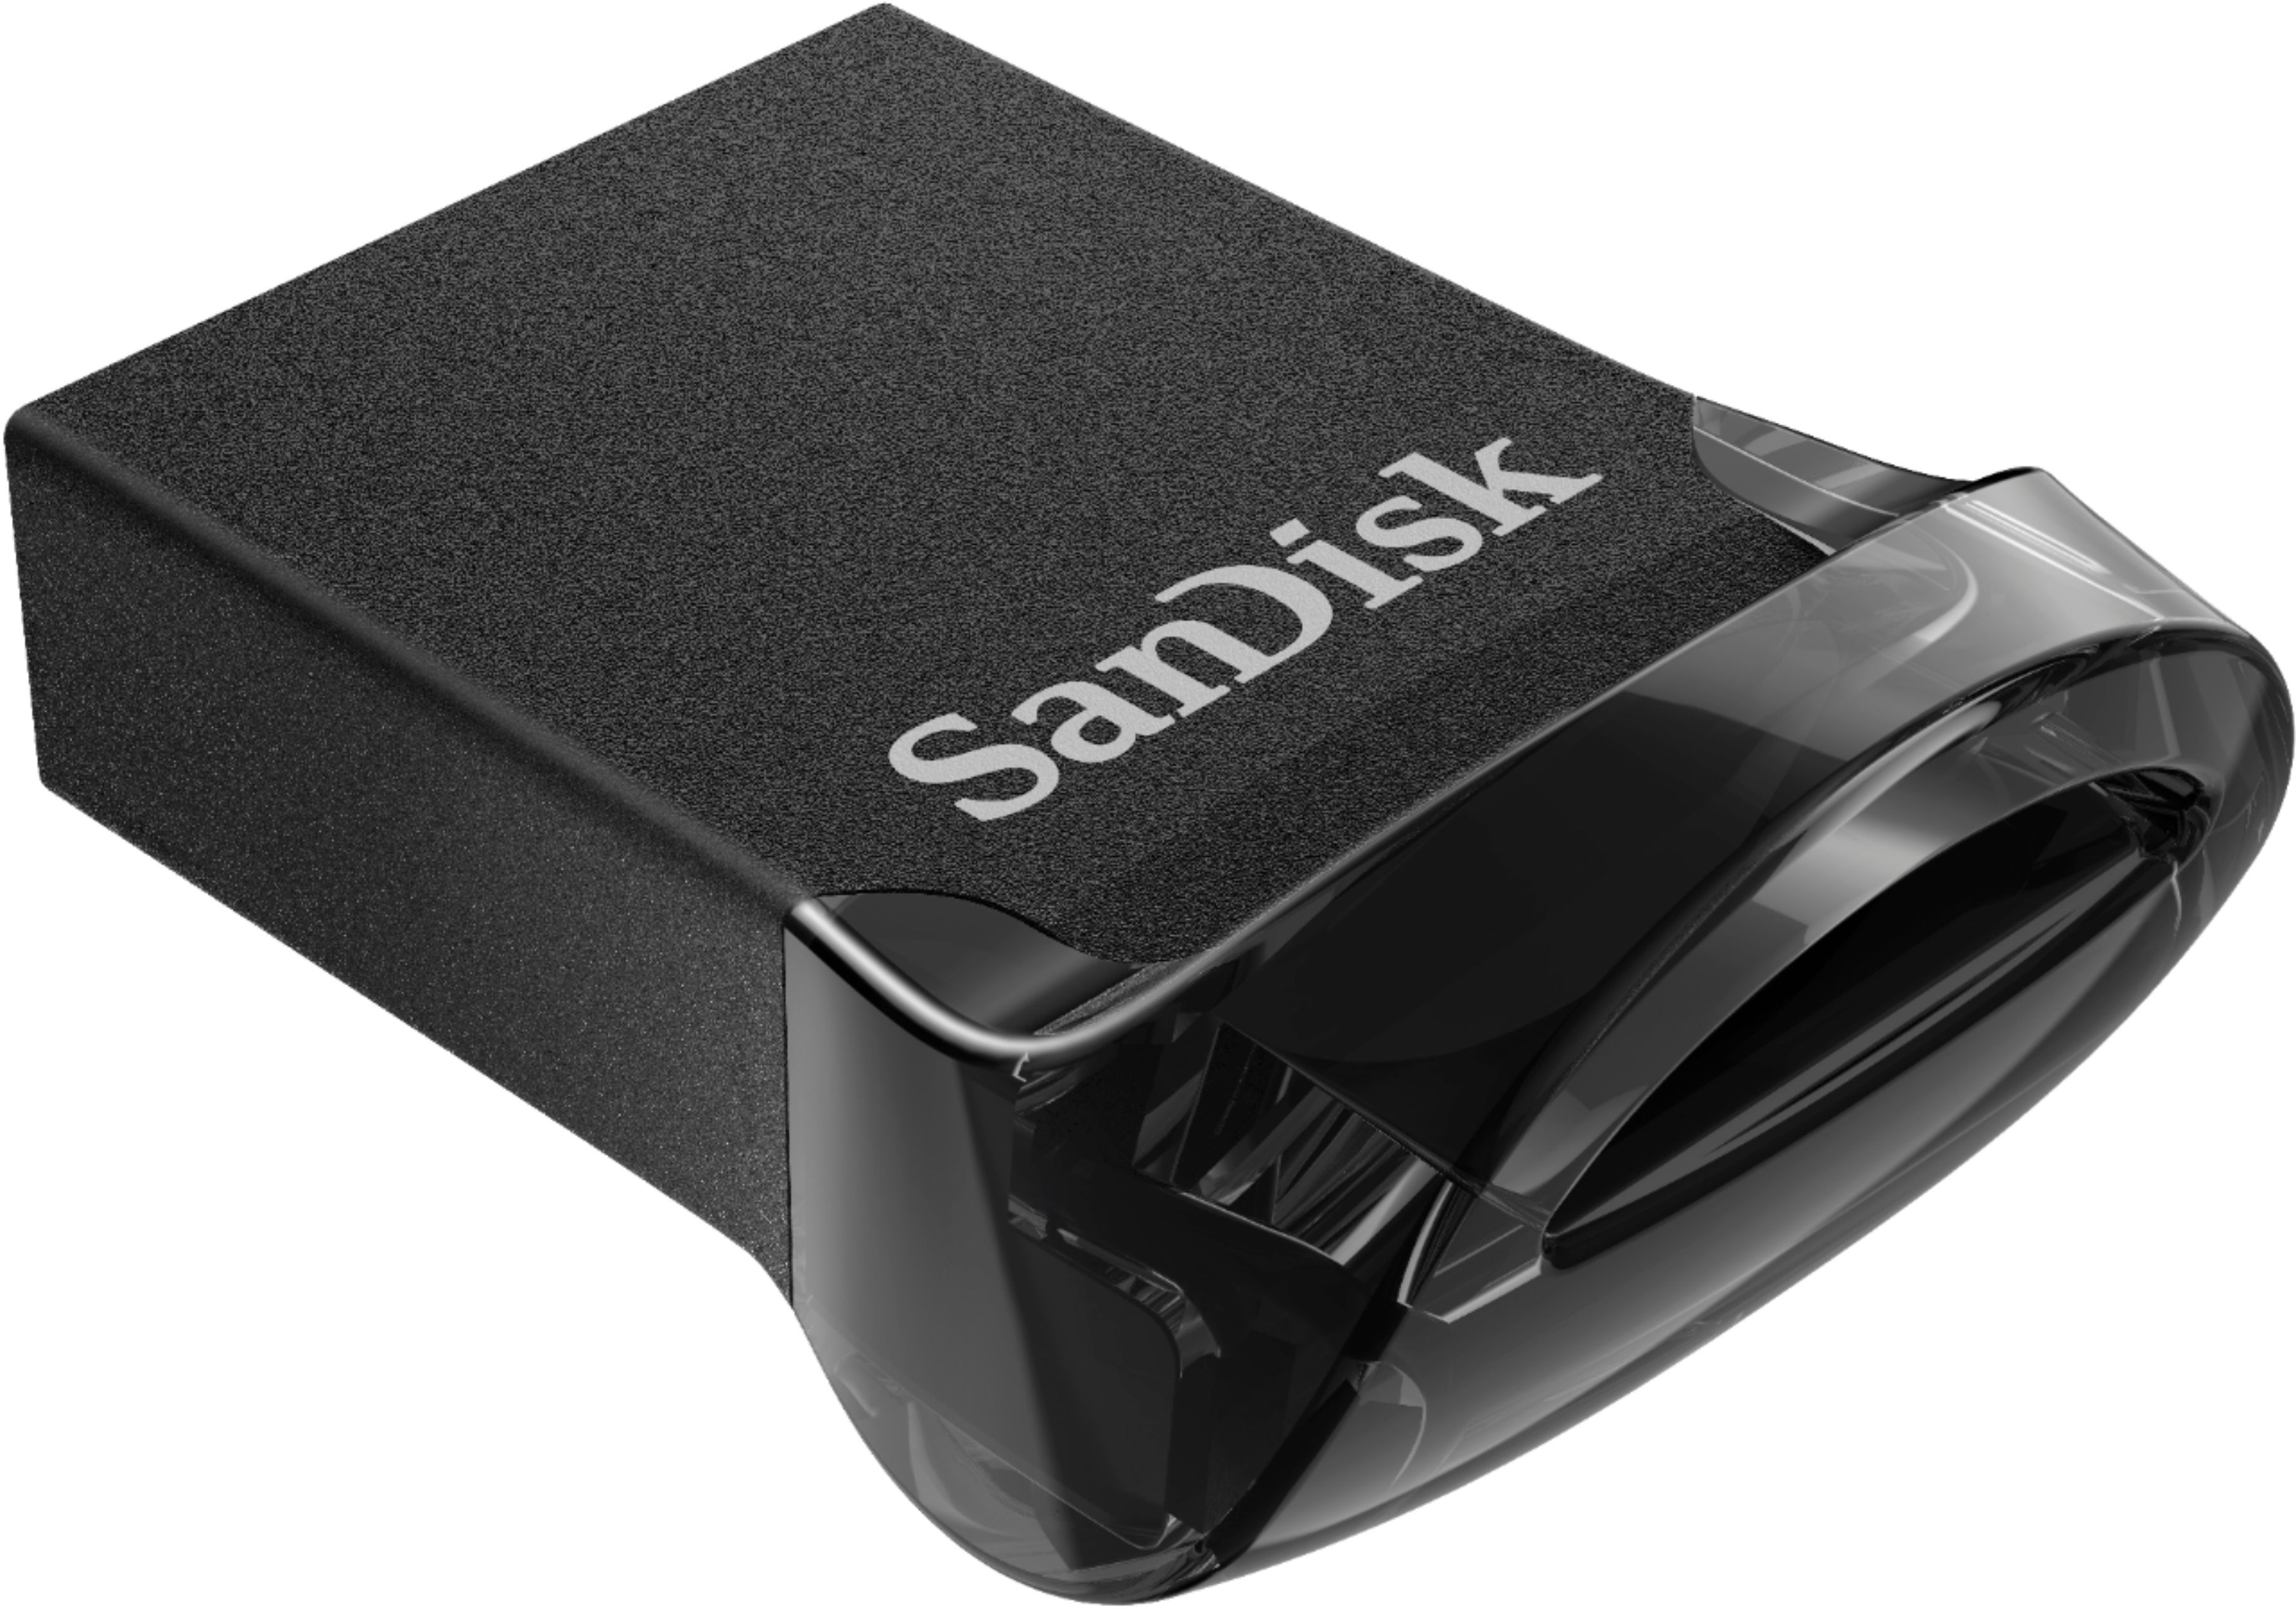 SanDisk Ultra Fit 256GB USB 3.1 Flash Drive Black SDCZ430-256G-A46